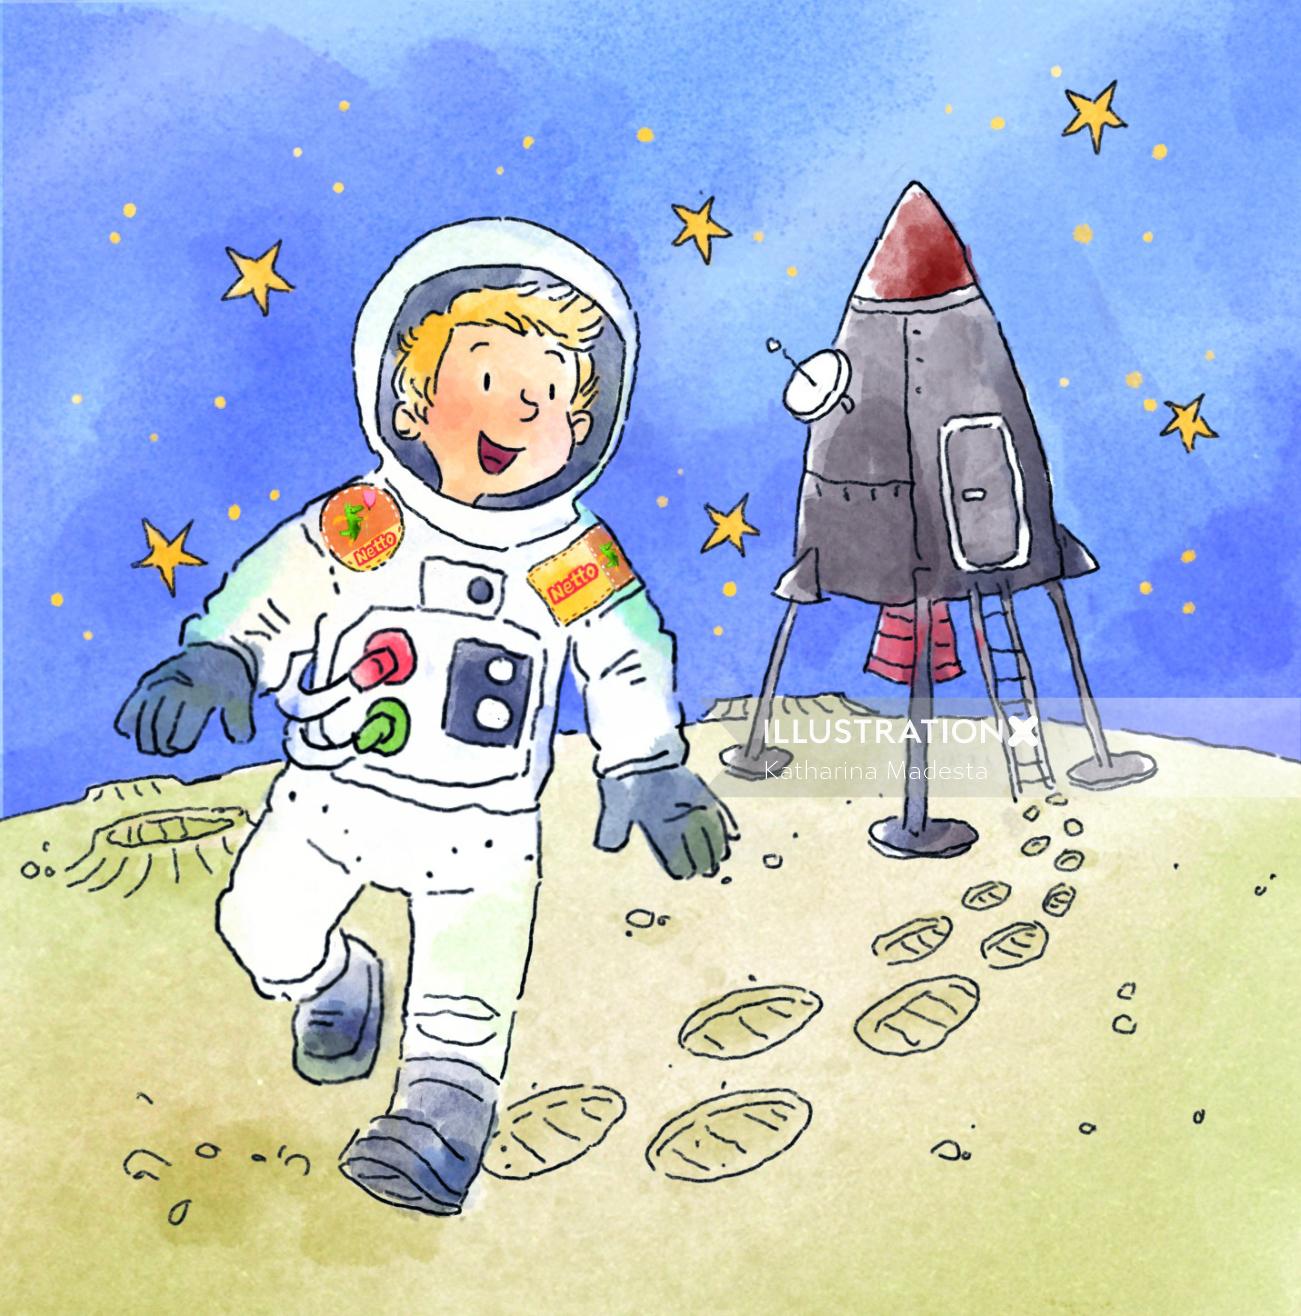 Menino astronauta de desenho animado e humor correndo na lua